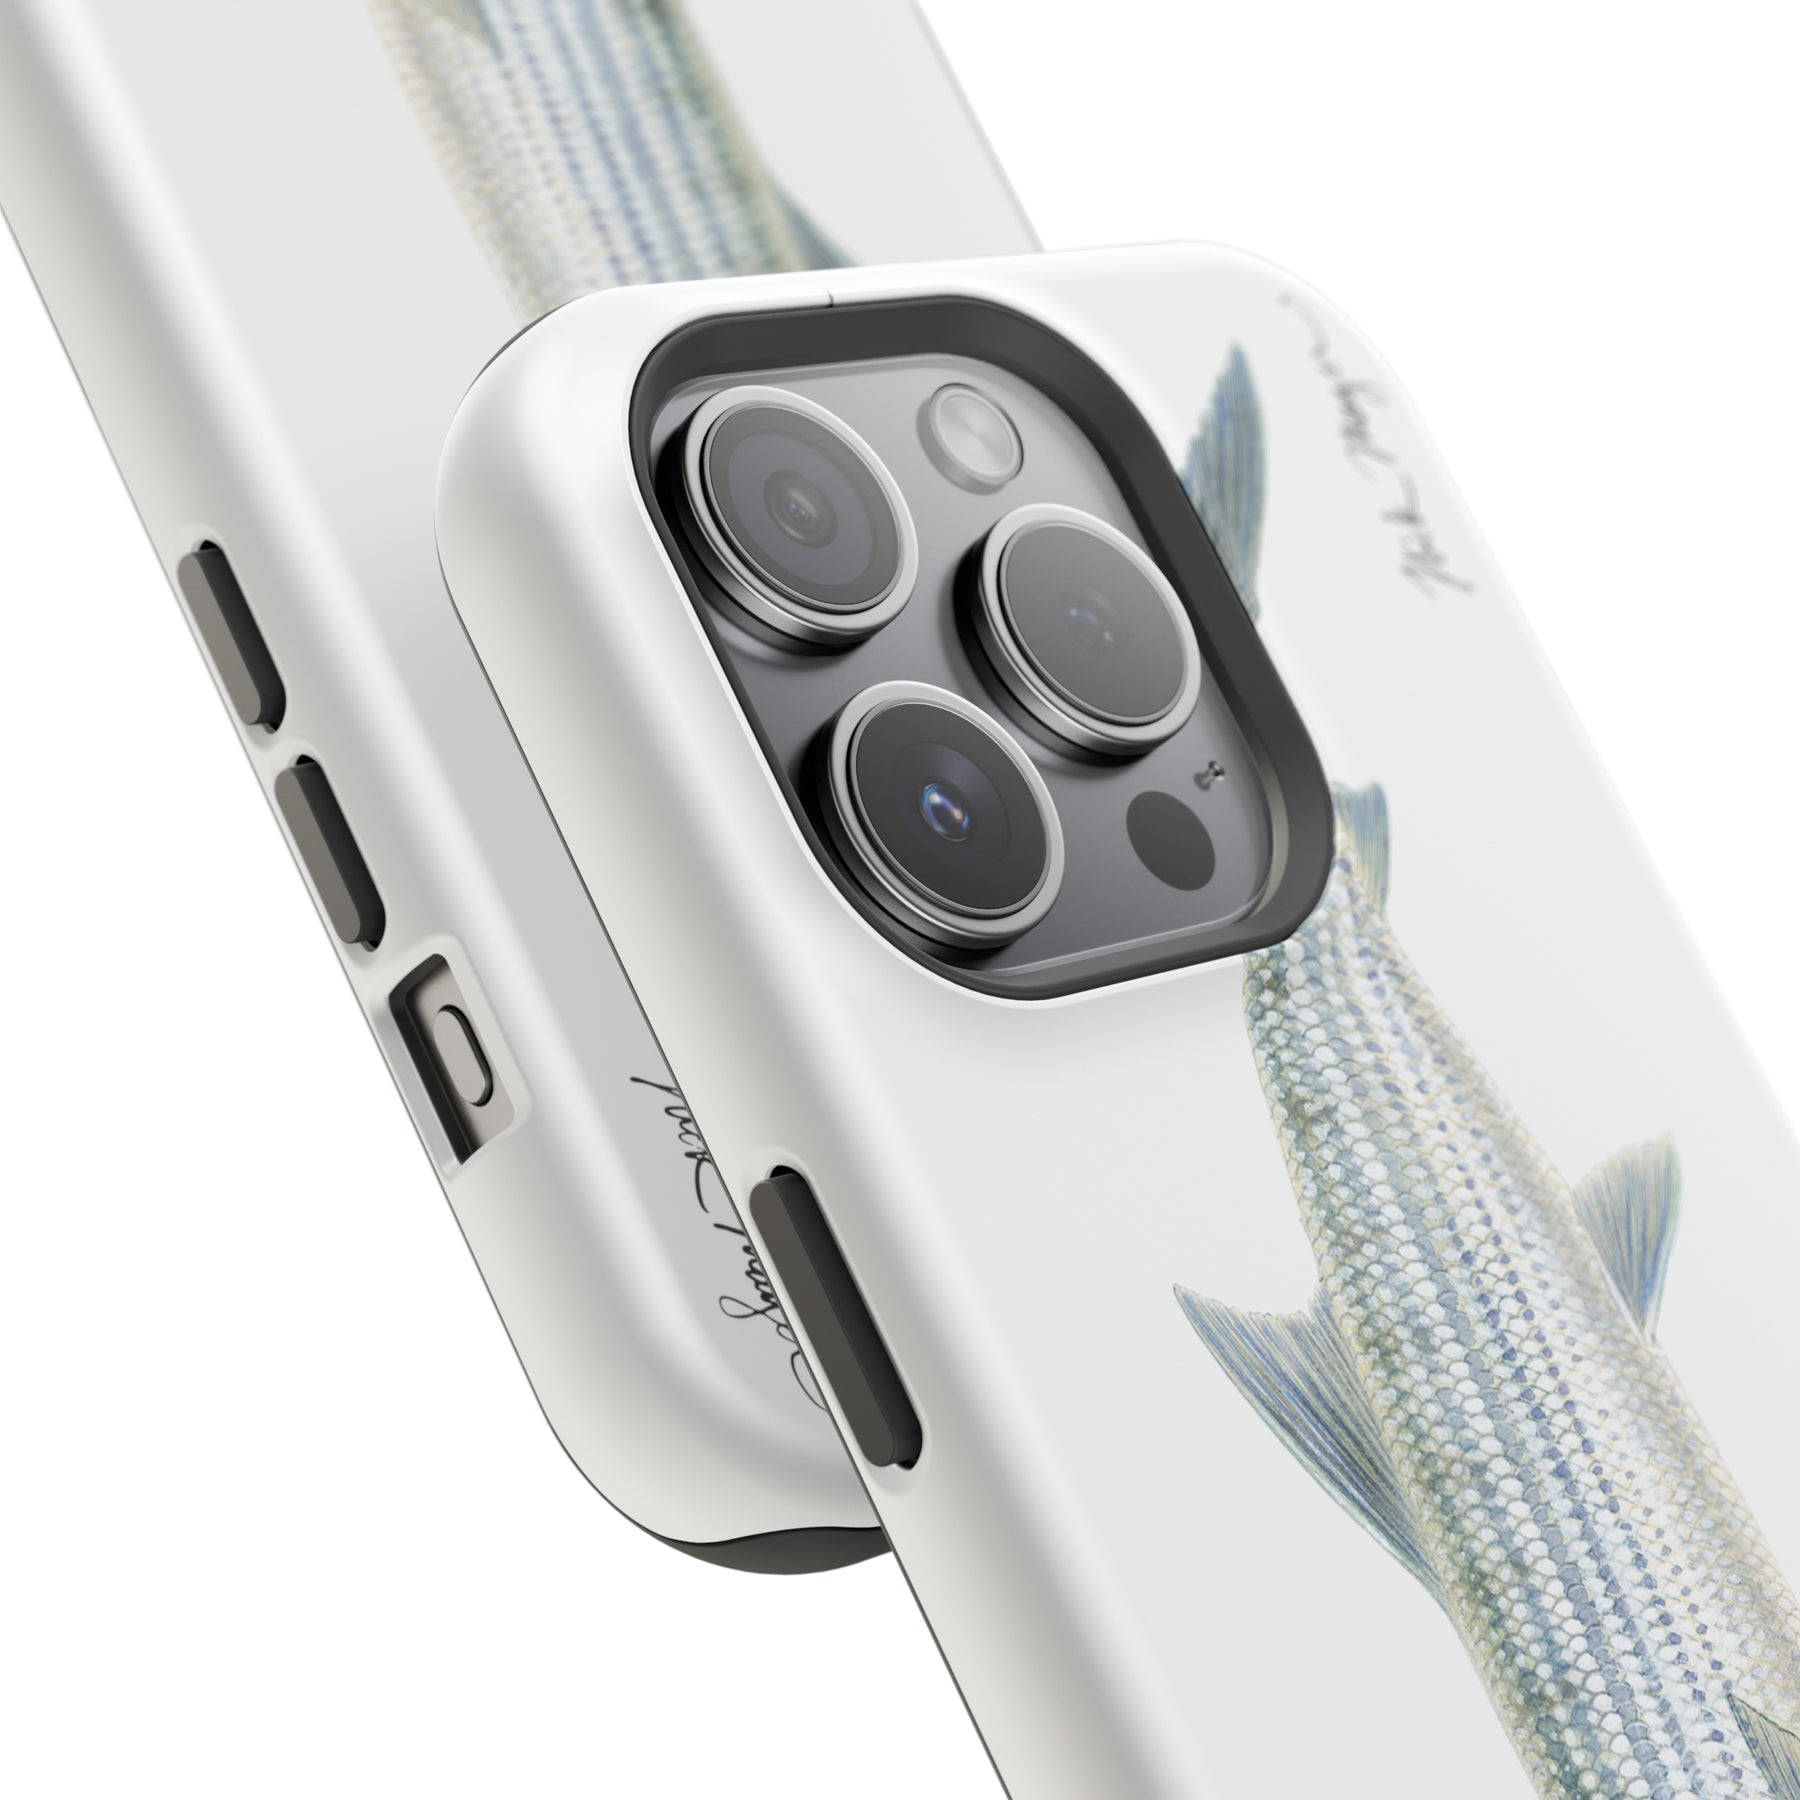 Bonefish MagSafe iPhone Case